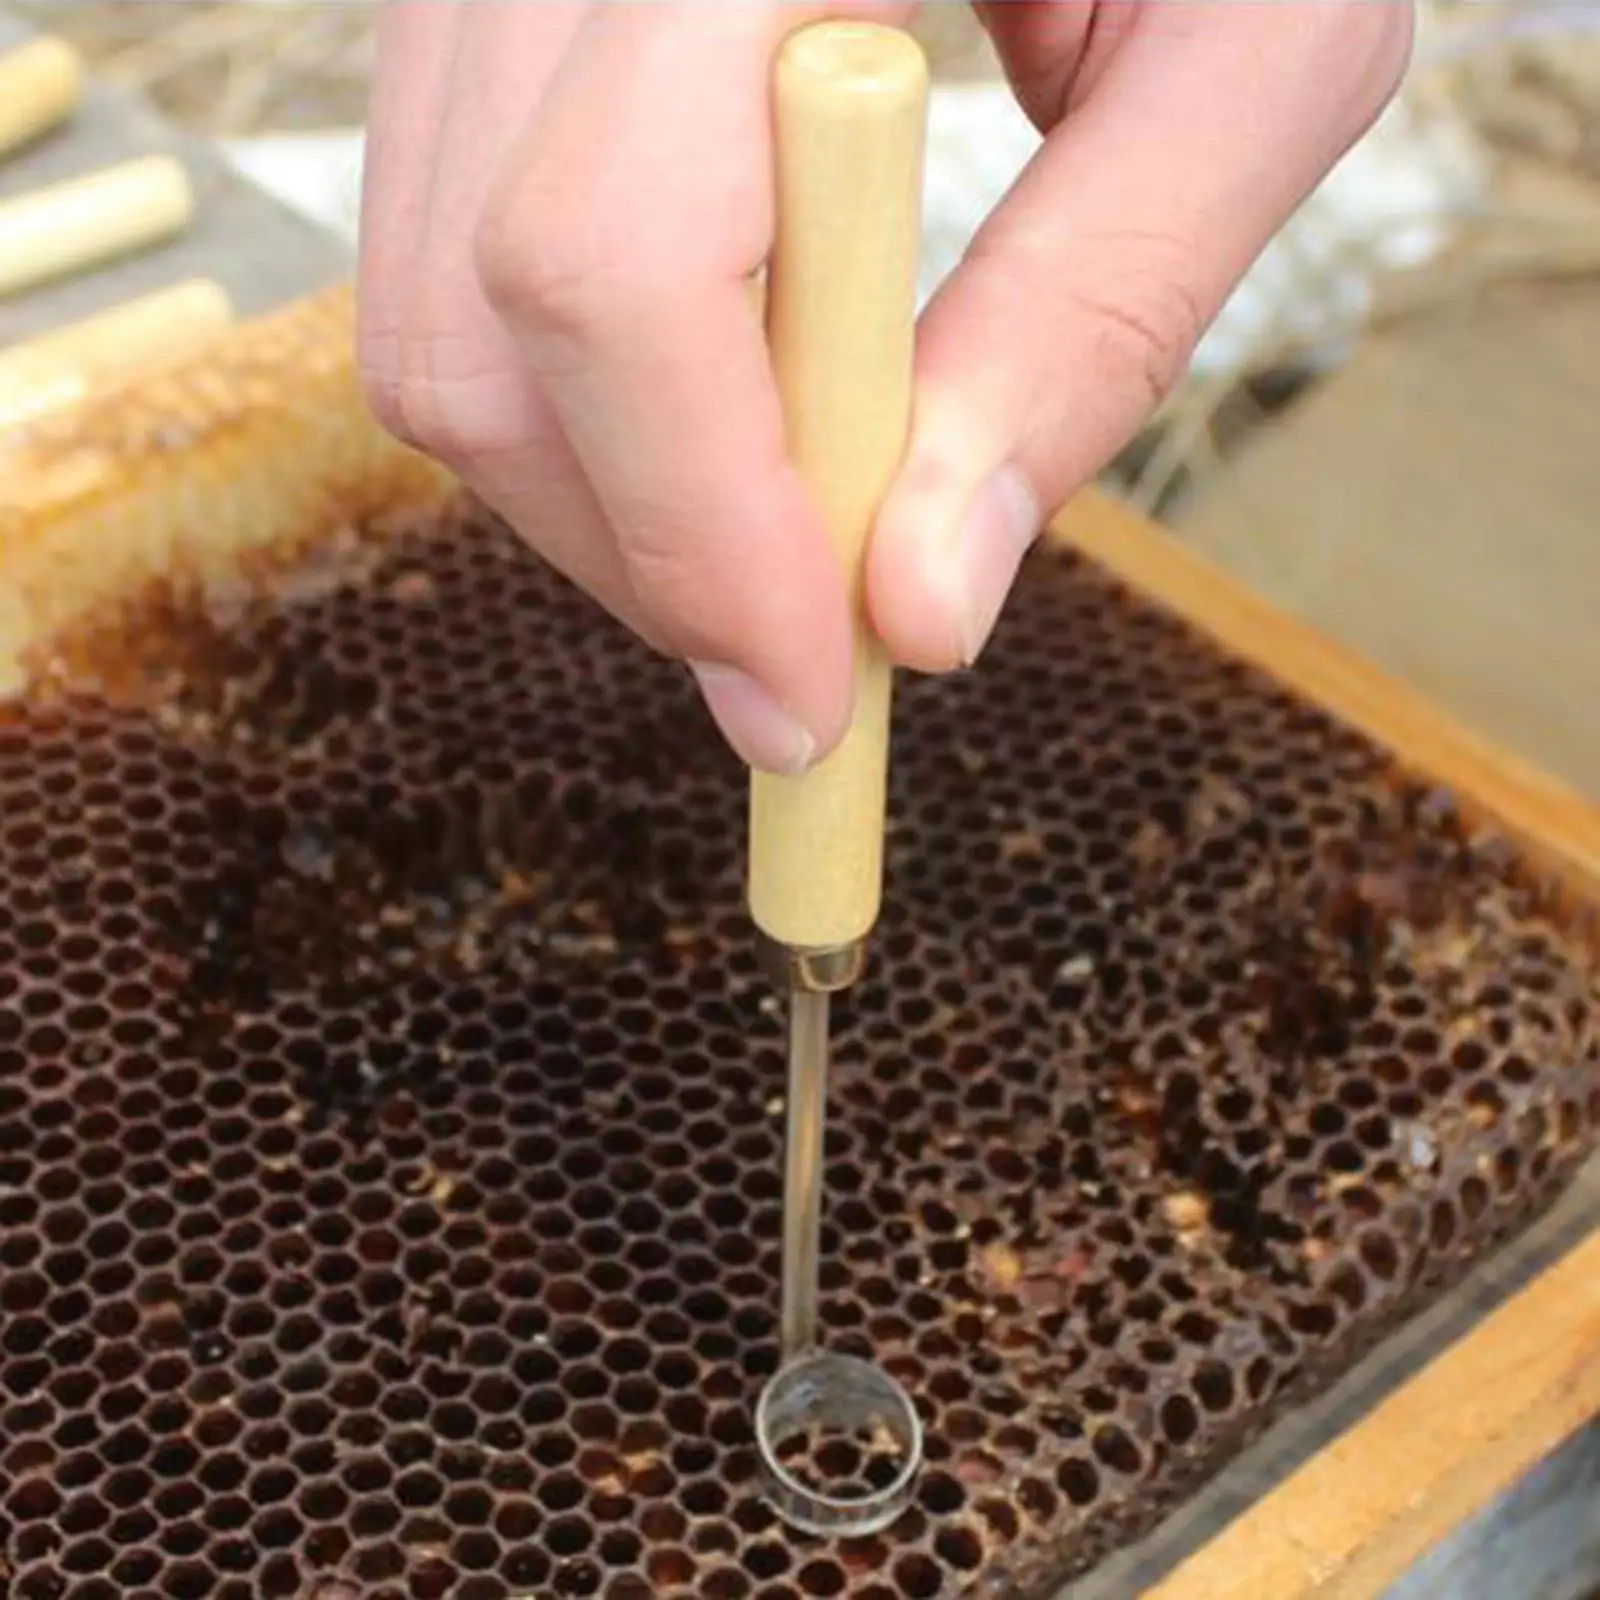 Beehive Tool Beehive Cleaning Scraper Durable Remover Beekeeping Tool Beekeepers Supplies for Outdoor Beekeeper Garden Outside